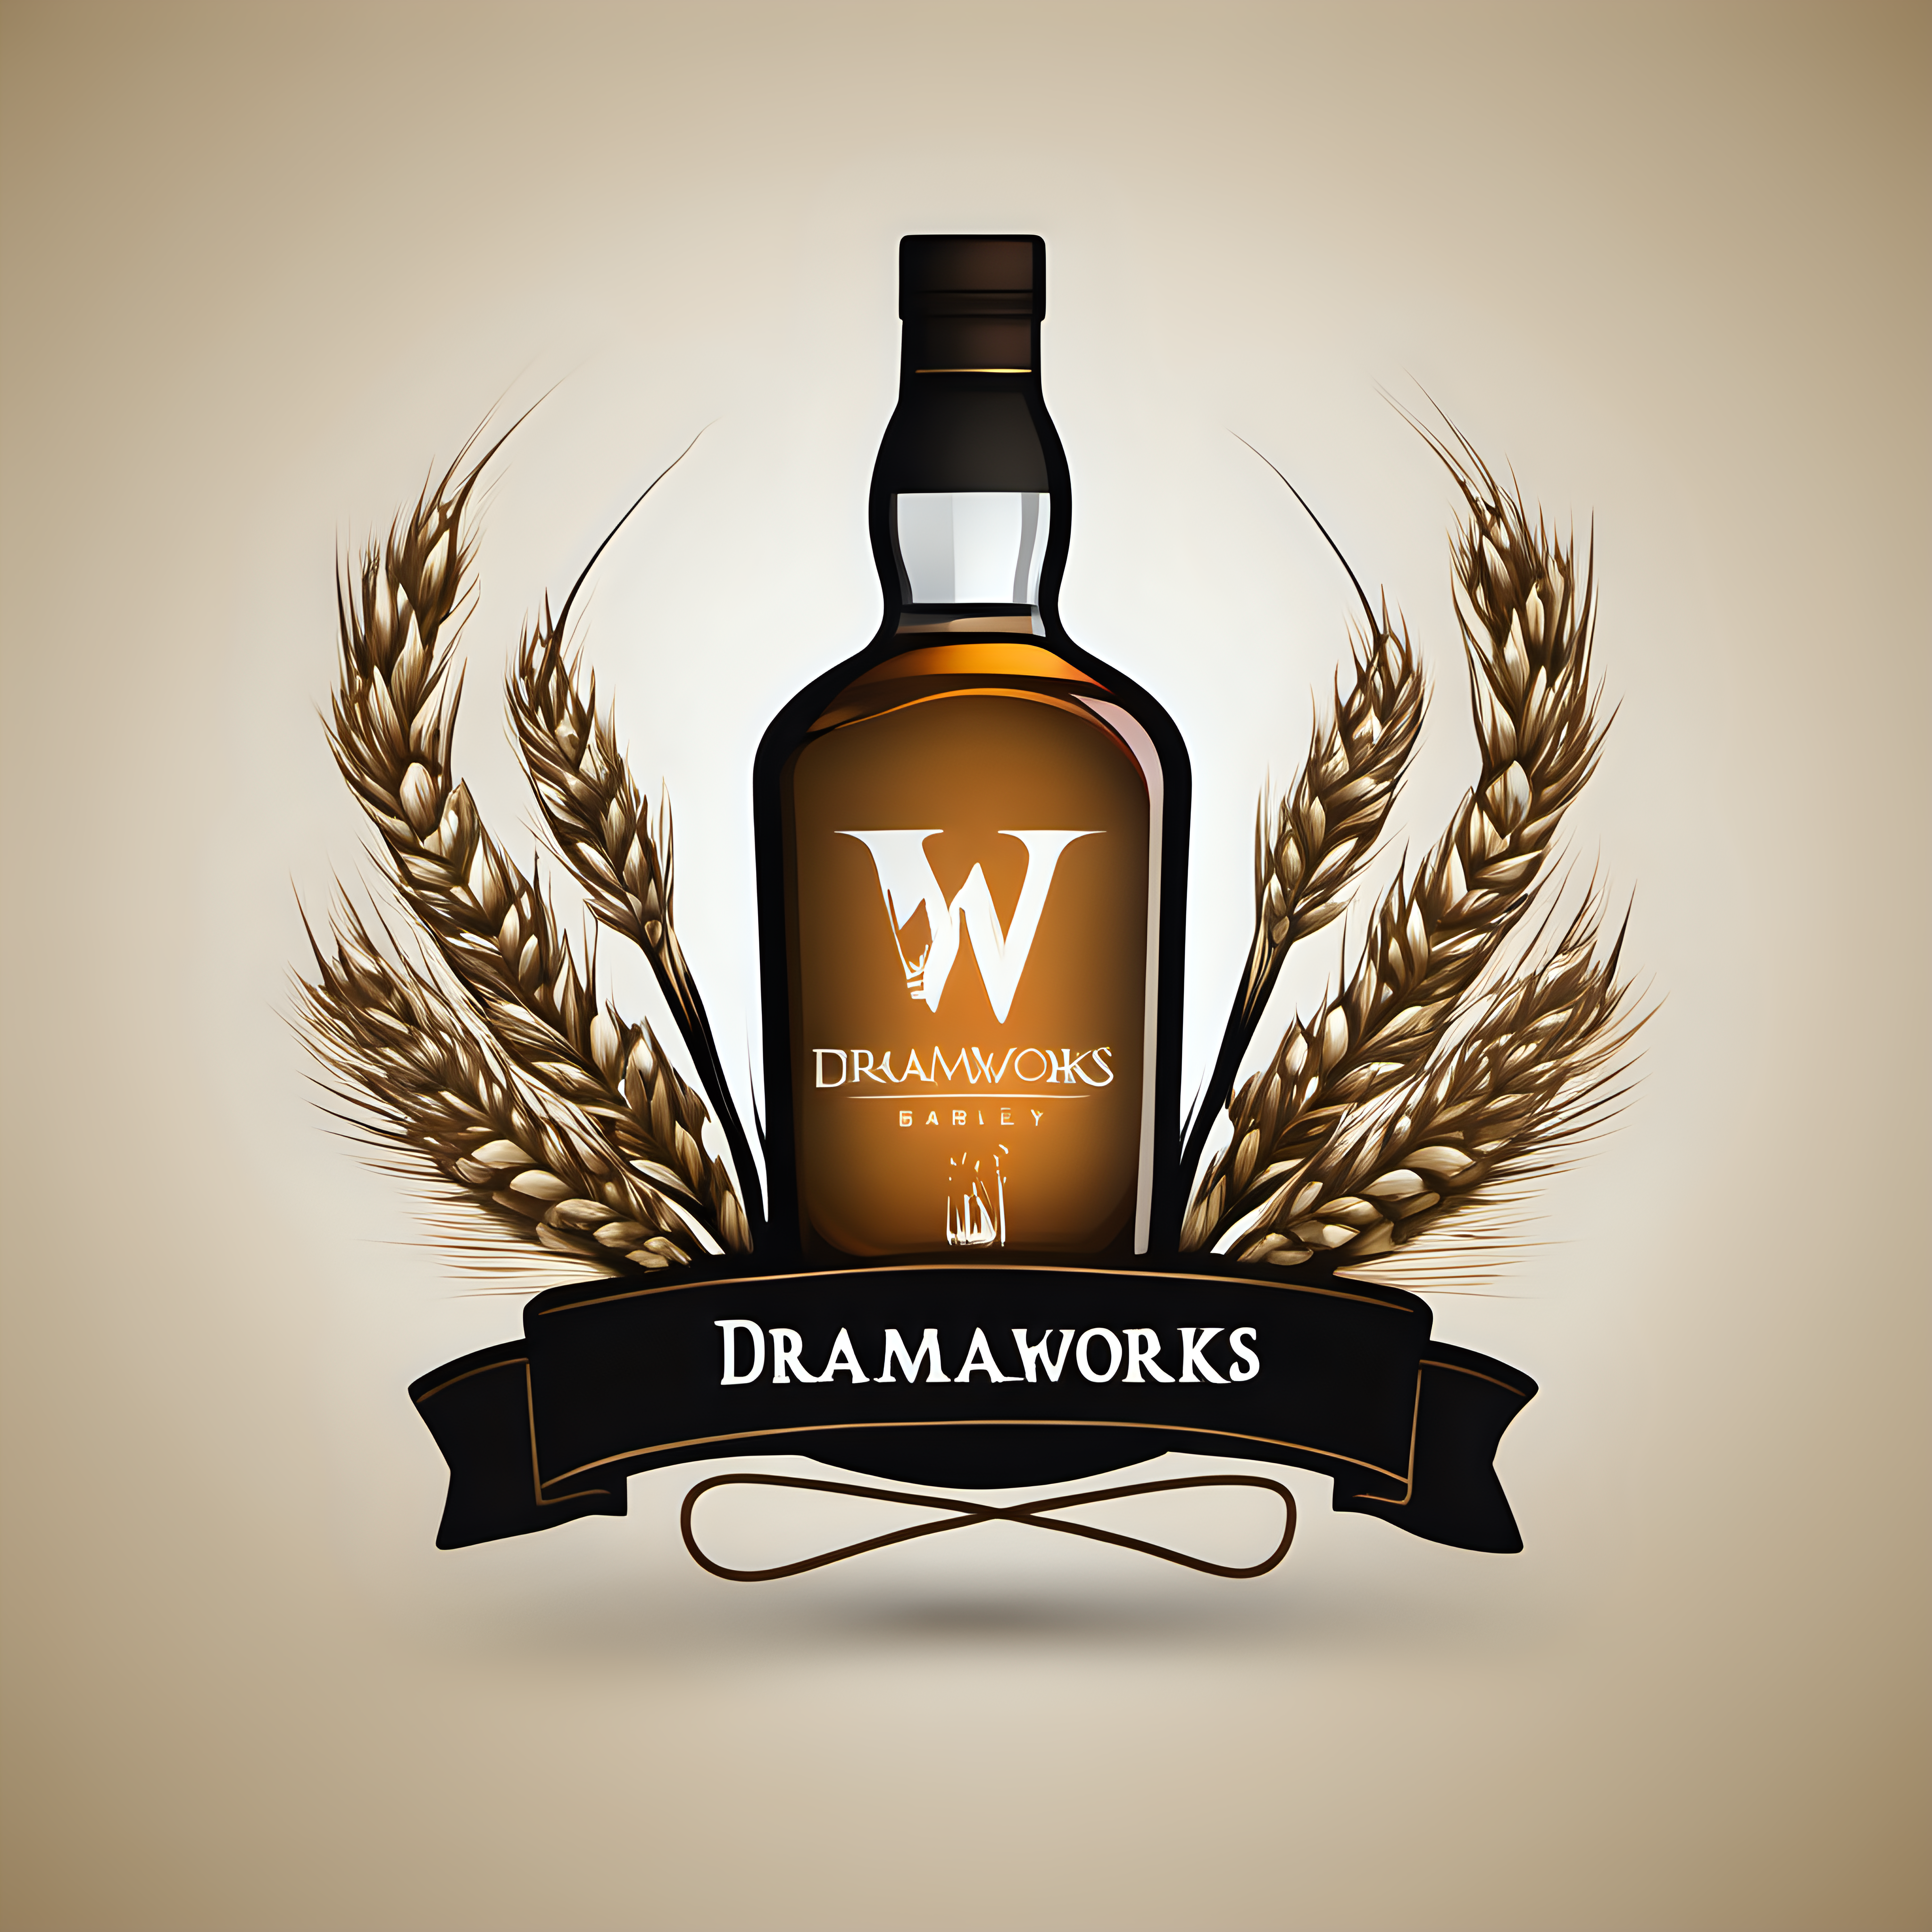 create a logo for Dramworks whisky brand using